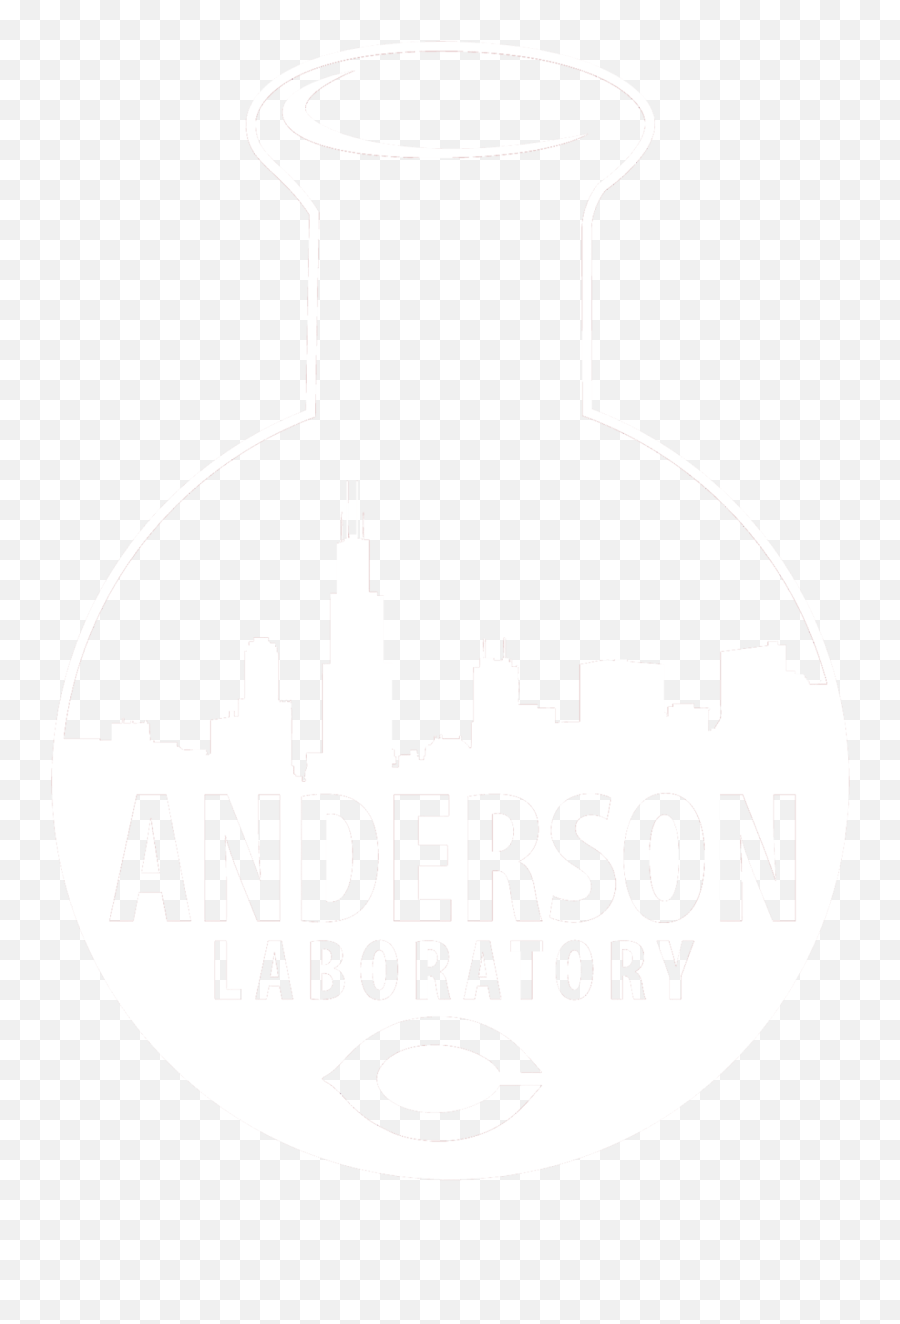 Anderson Laboratory Emoji,Anderson University Logo